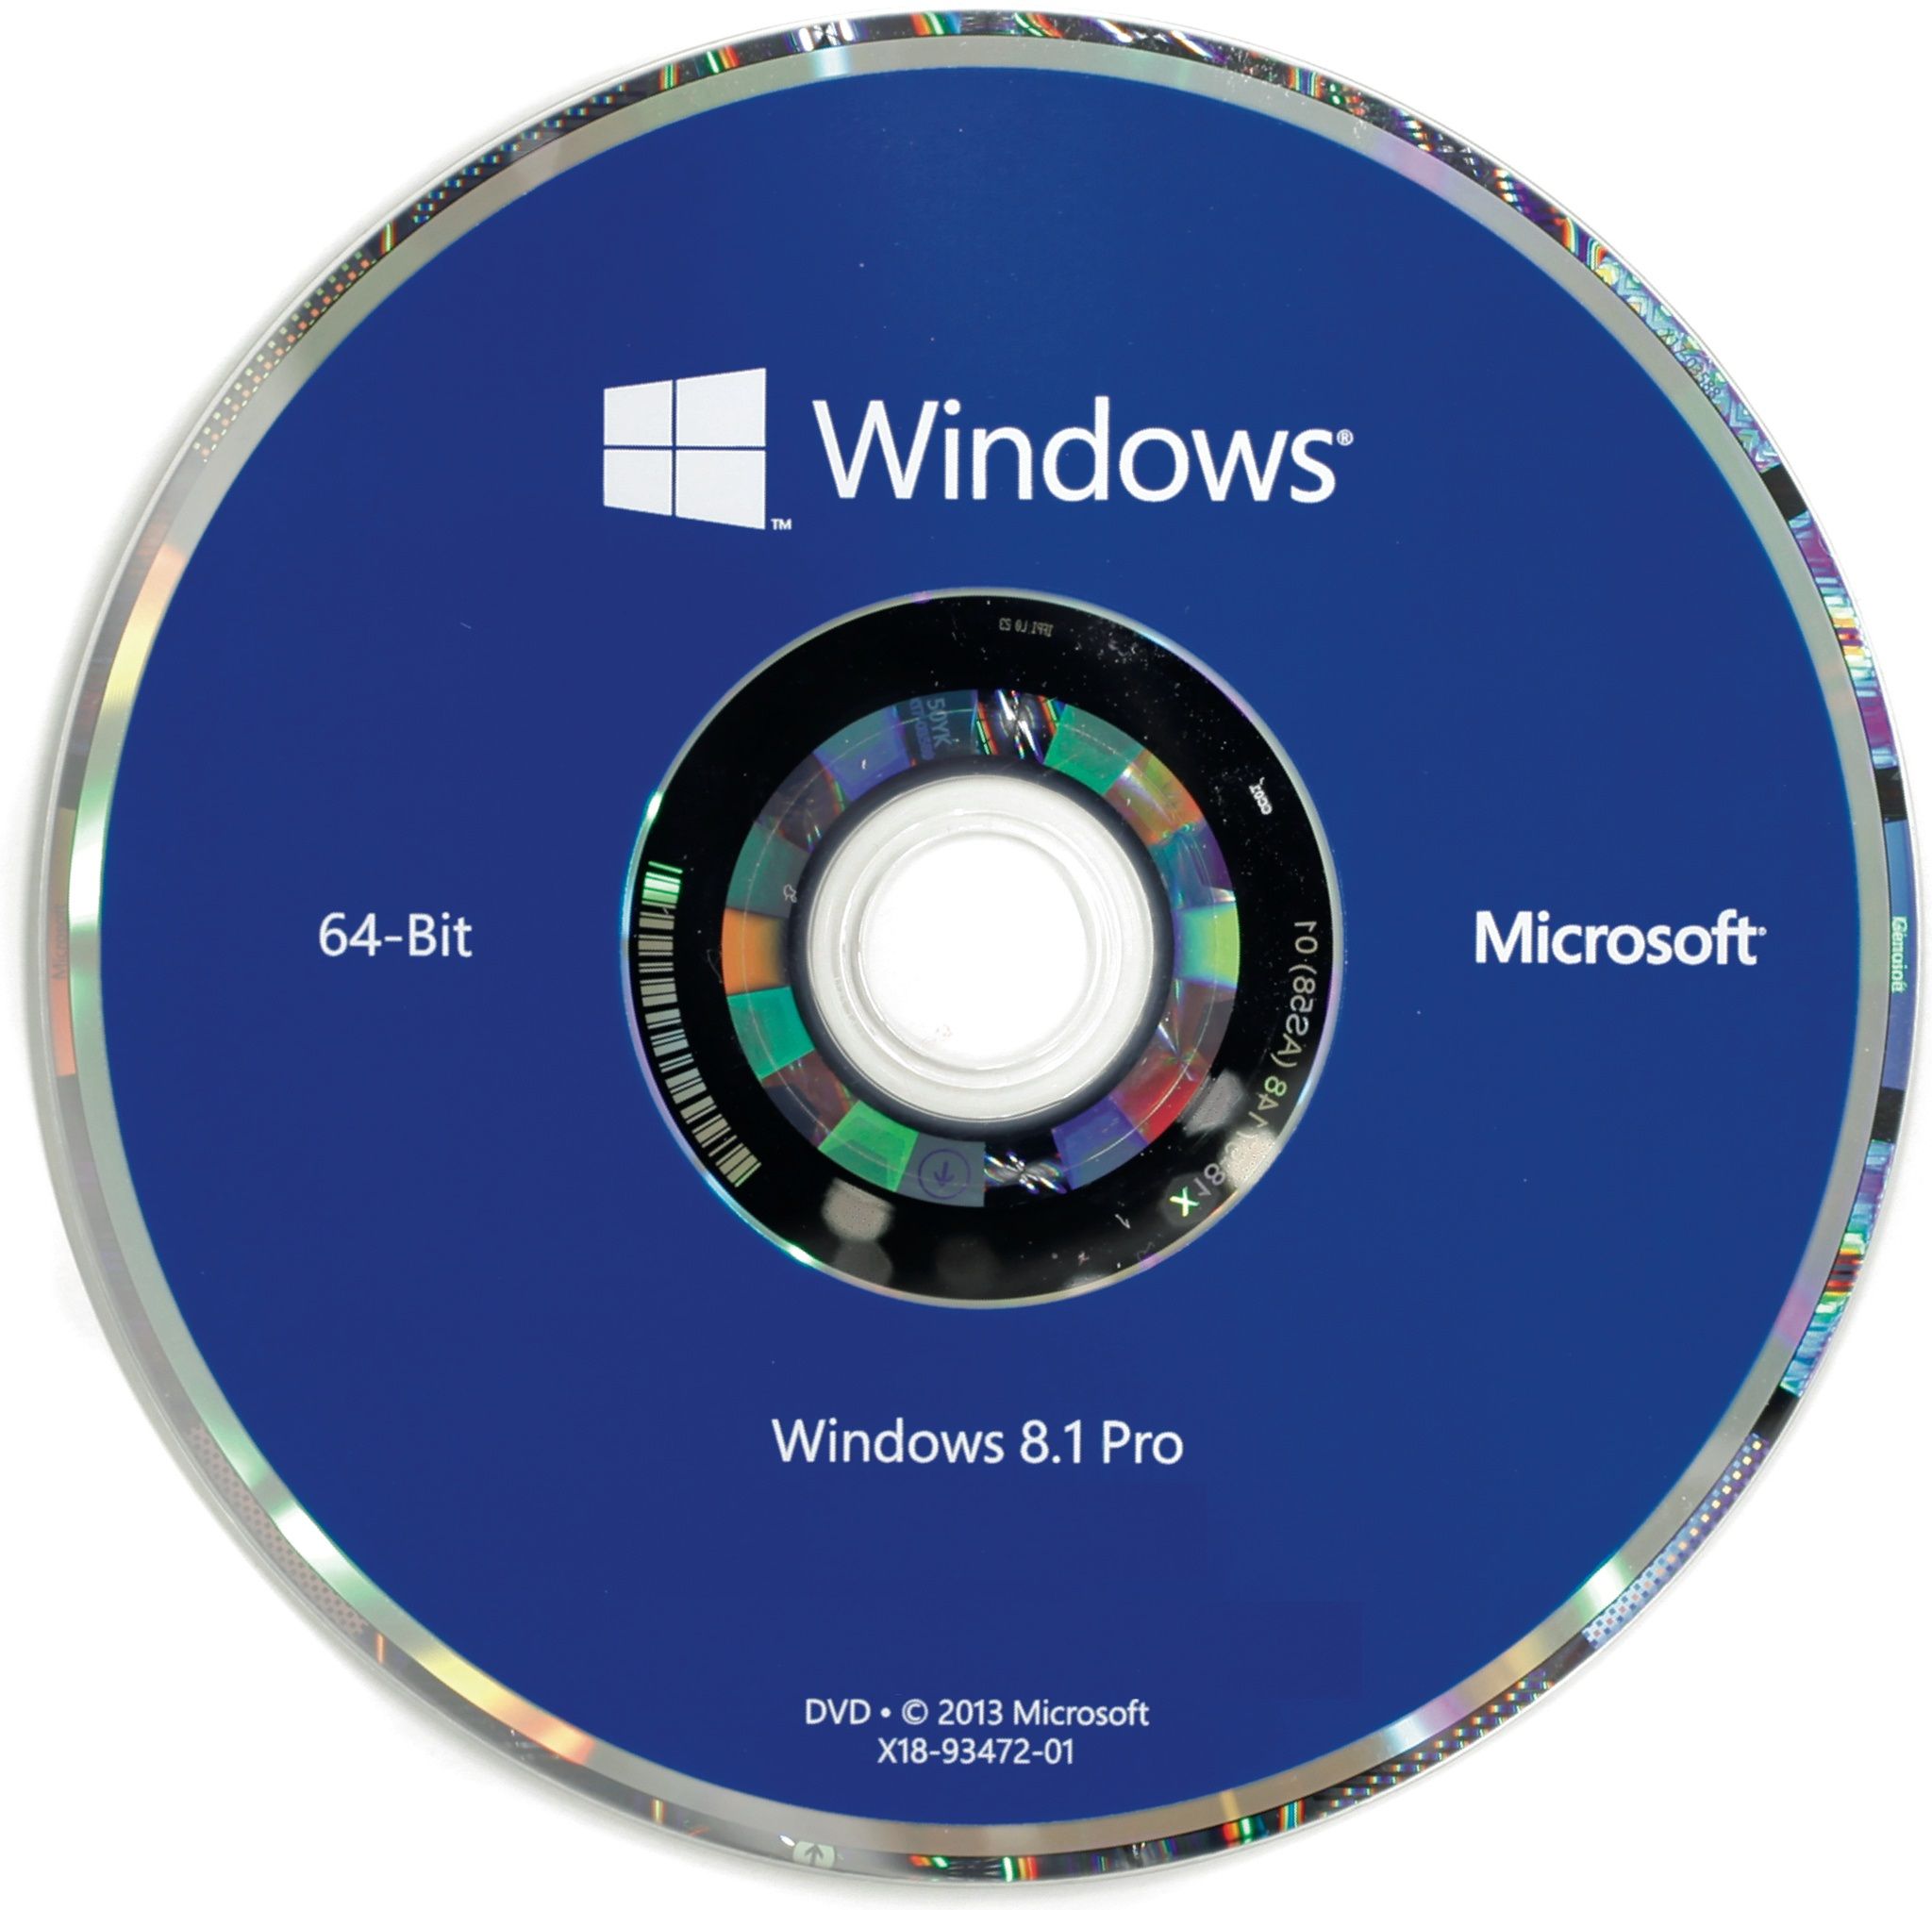 Microsoft windows 8.1 pro free upgrade